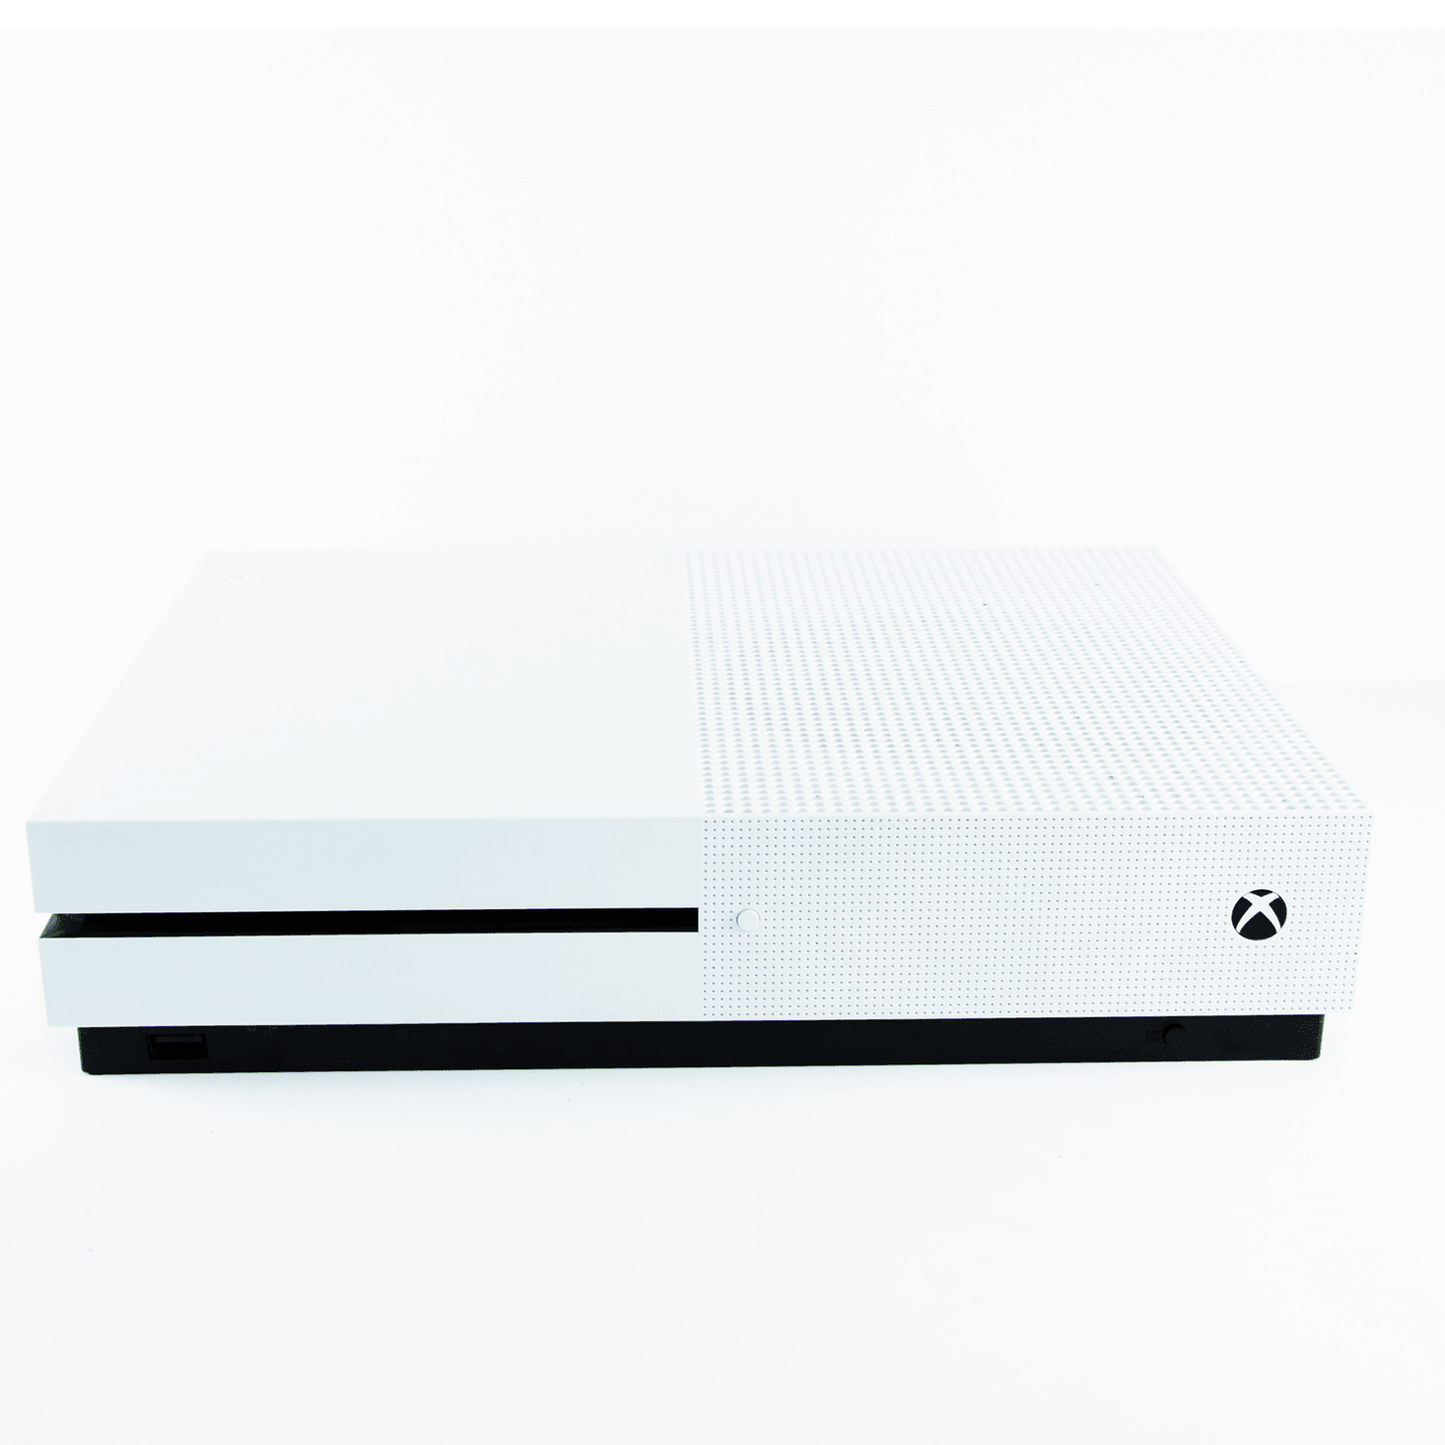 Microsoft Xbox - ipawnishop.com